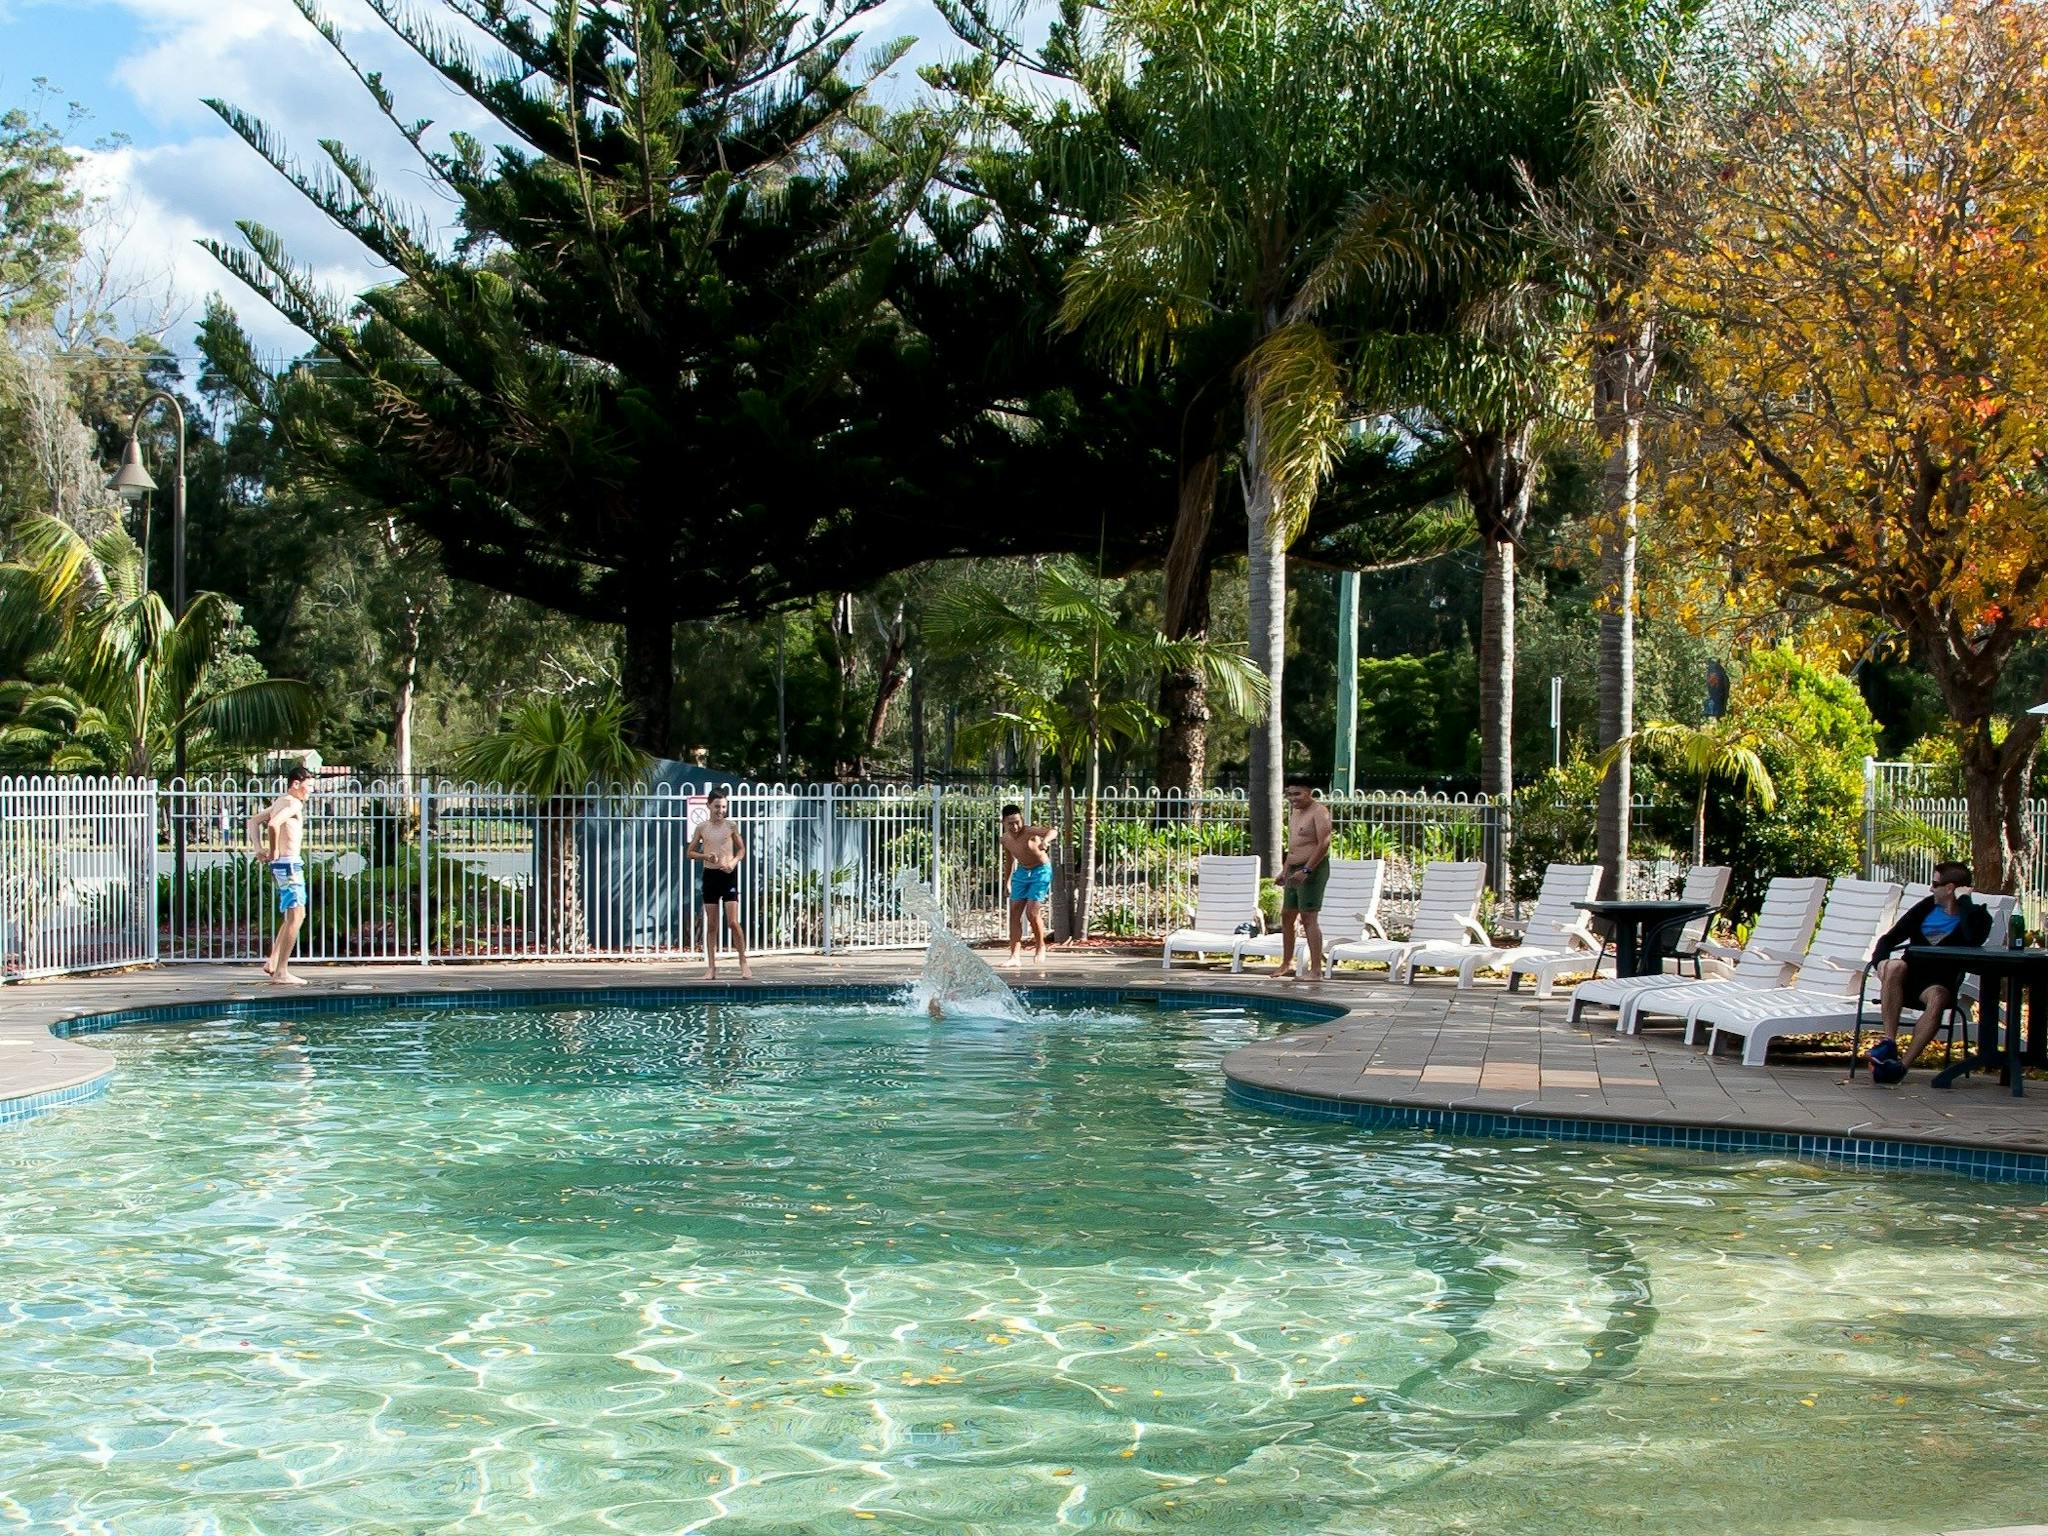 BIG4 Batemans Bay Beach Resort | NSW Holidays & Accommodation, Things